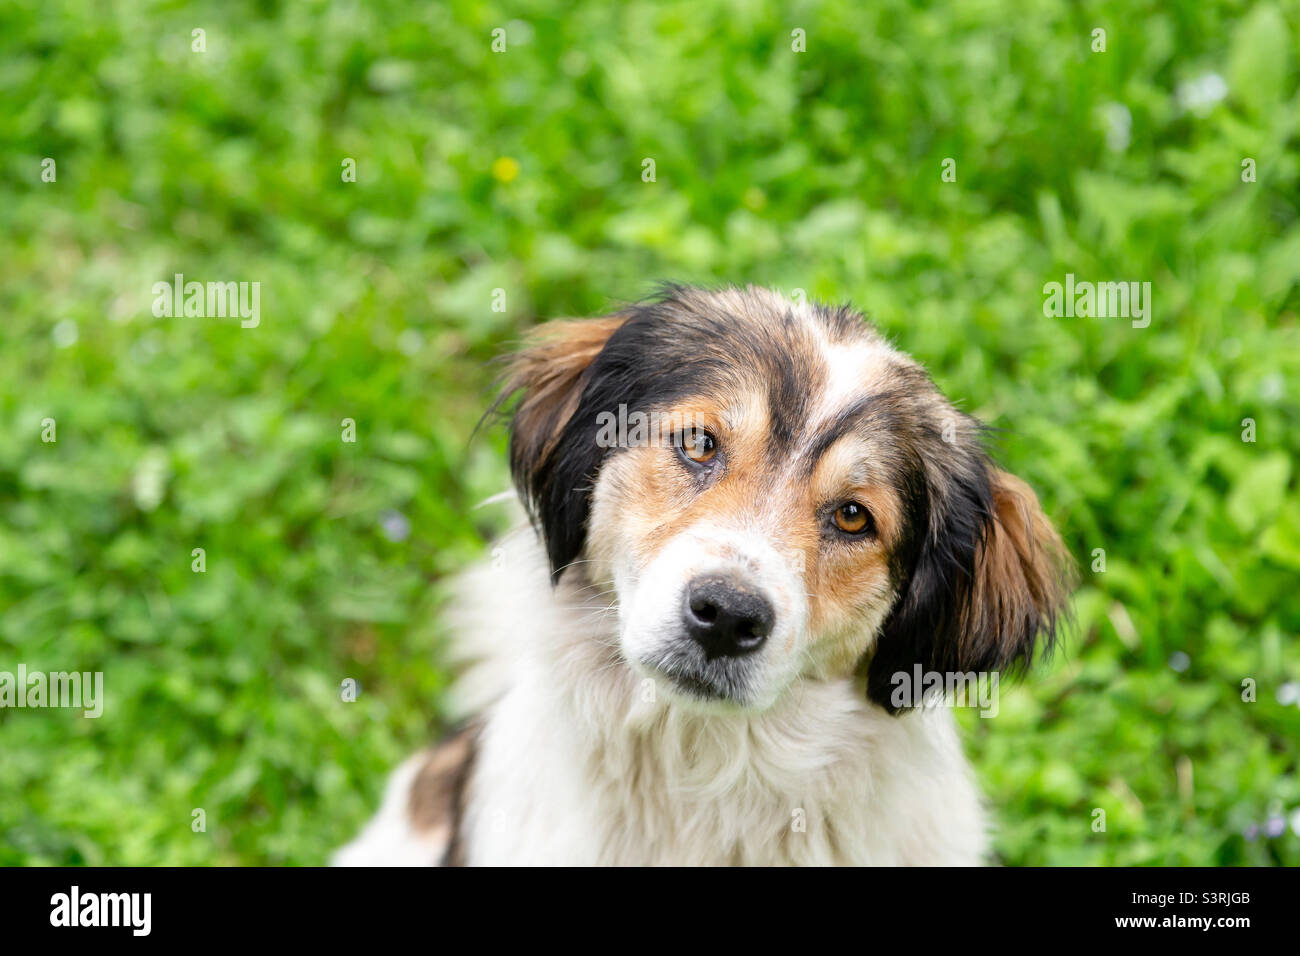 Cute dog portrait in the park, friendly loving pet Stock Photo